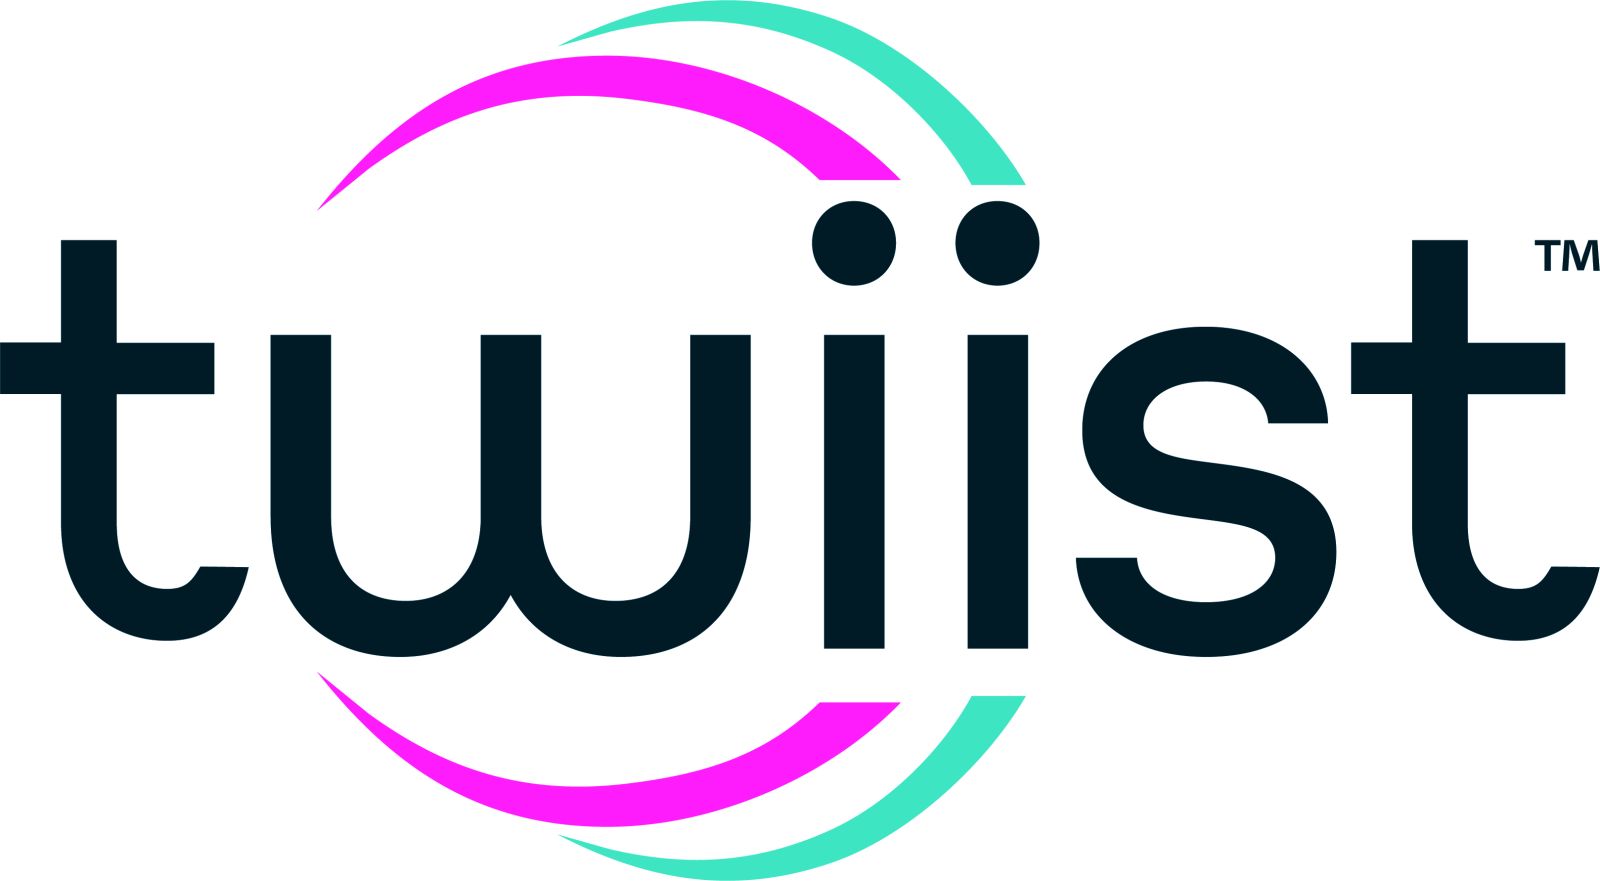 Sequel twiist logo